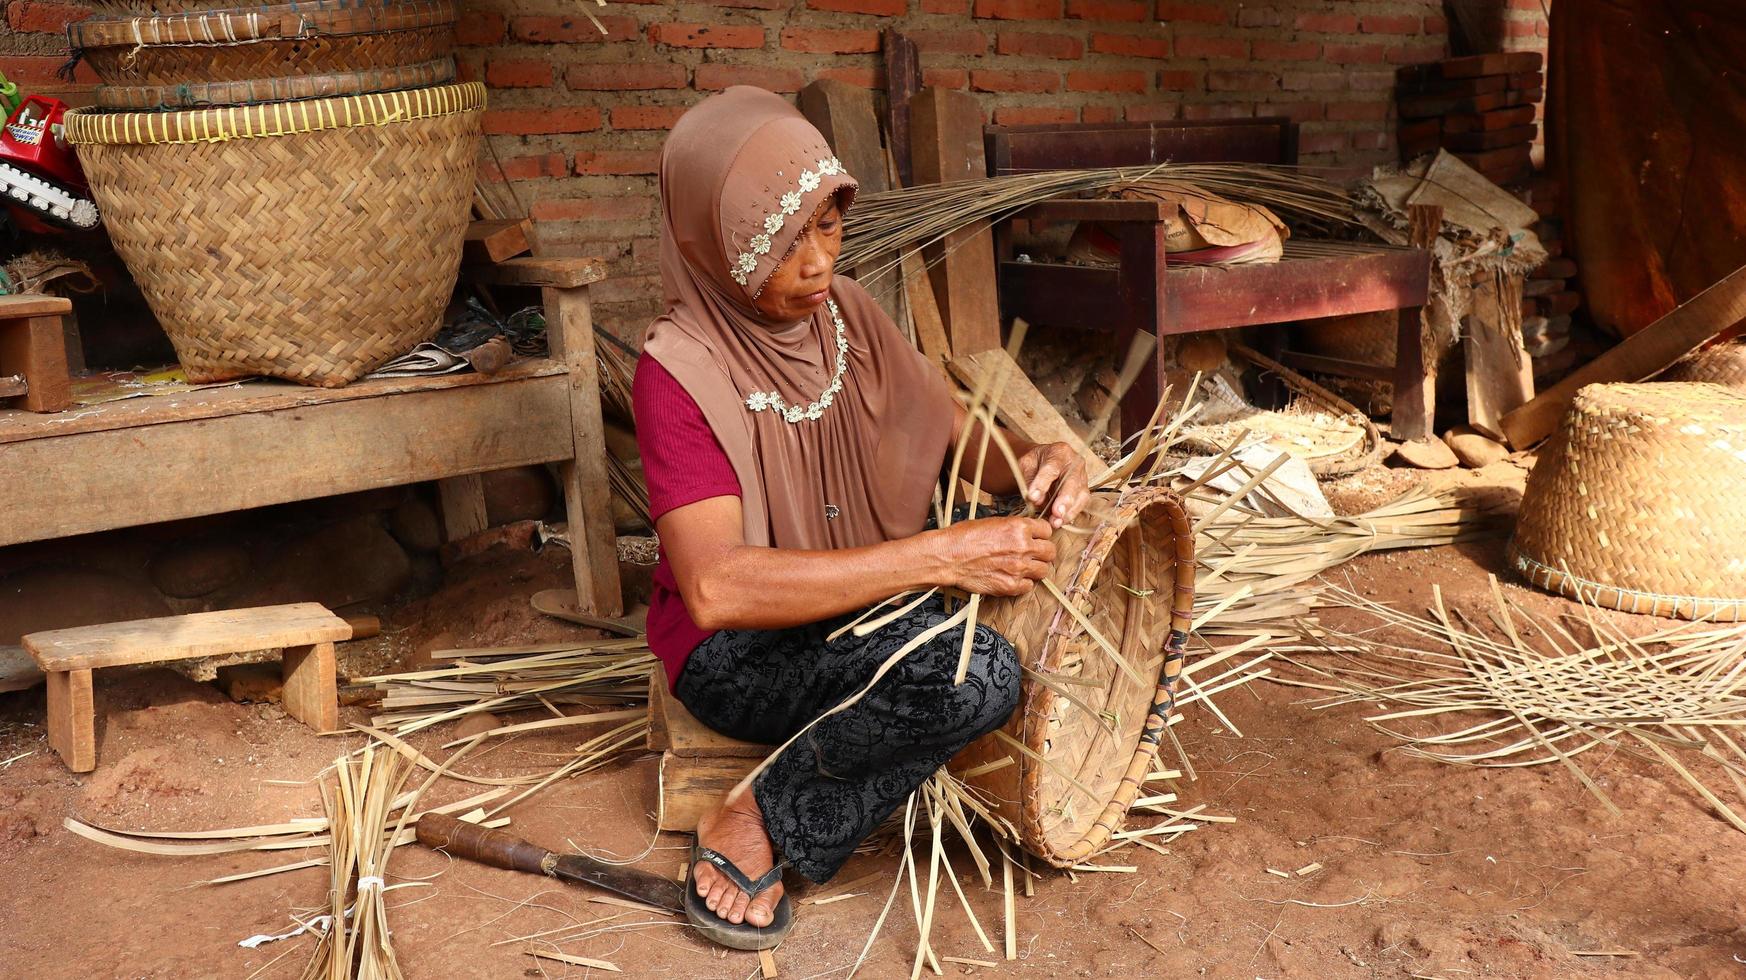 bamboo basket craftswoman while doing his work in a place, Batang, Jawa Tengah, Indonesia, May 26, 2019 photo